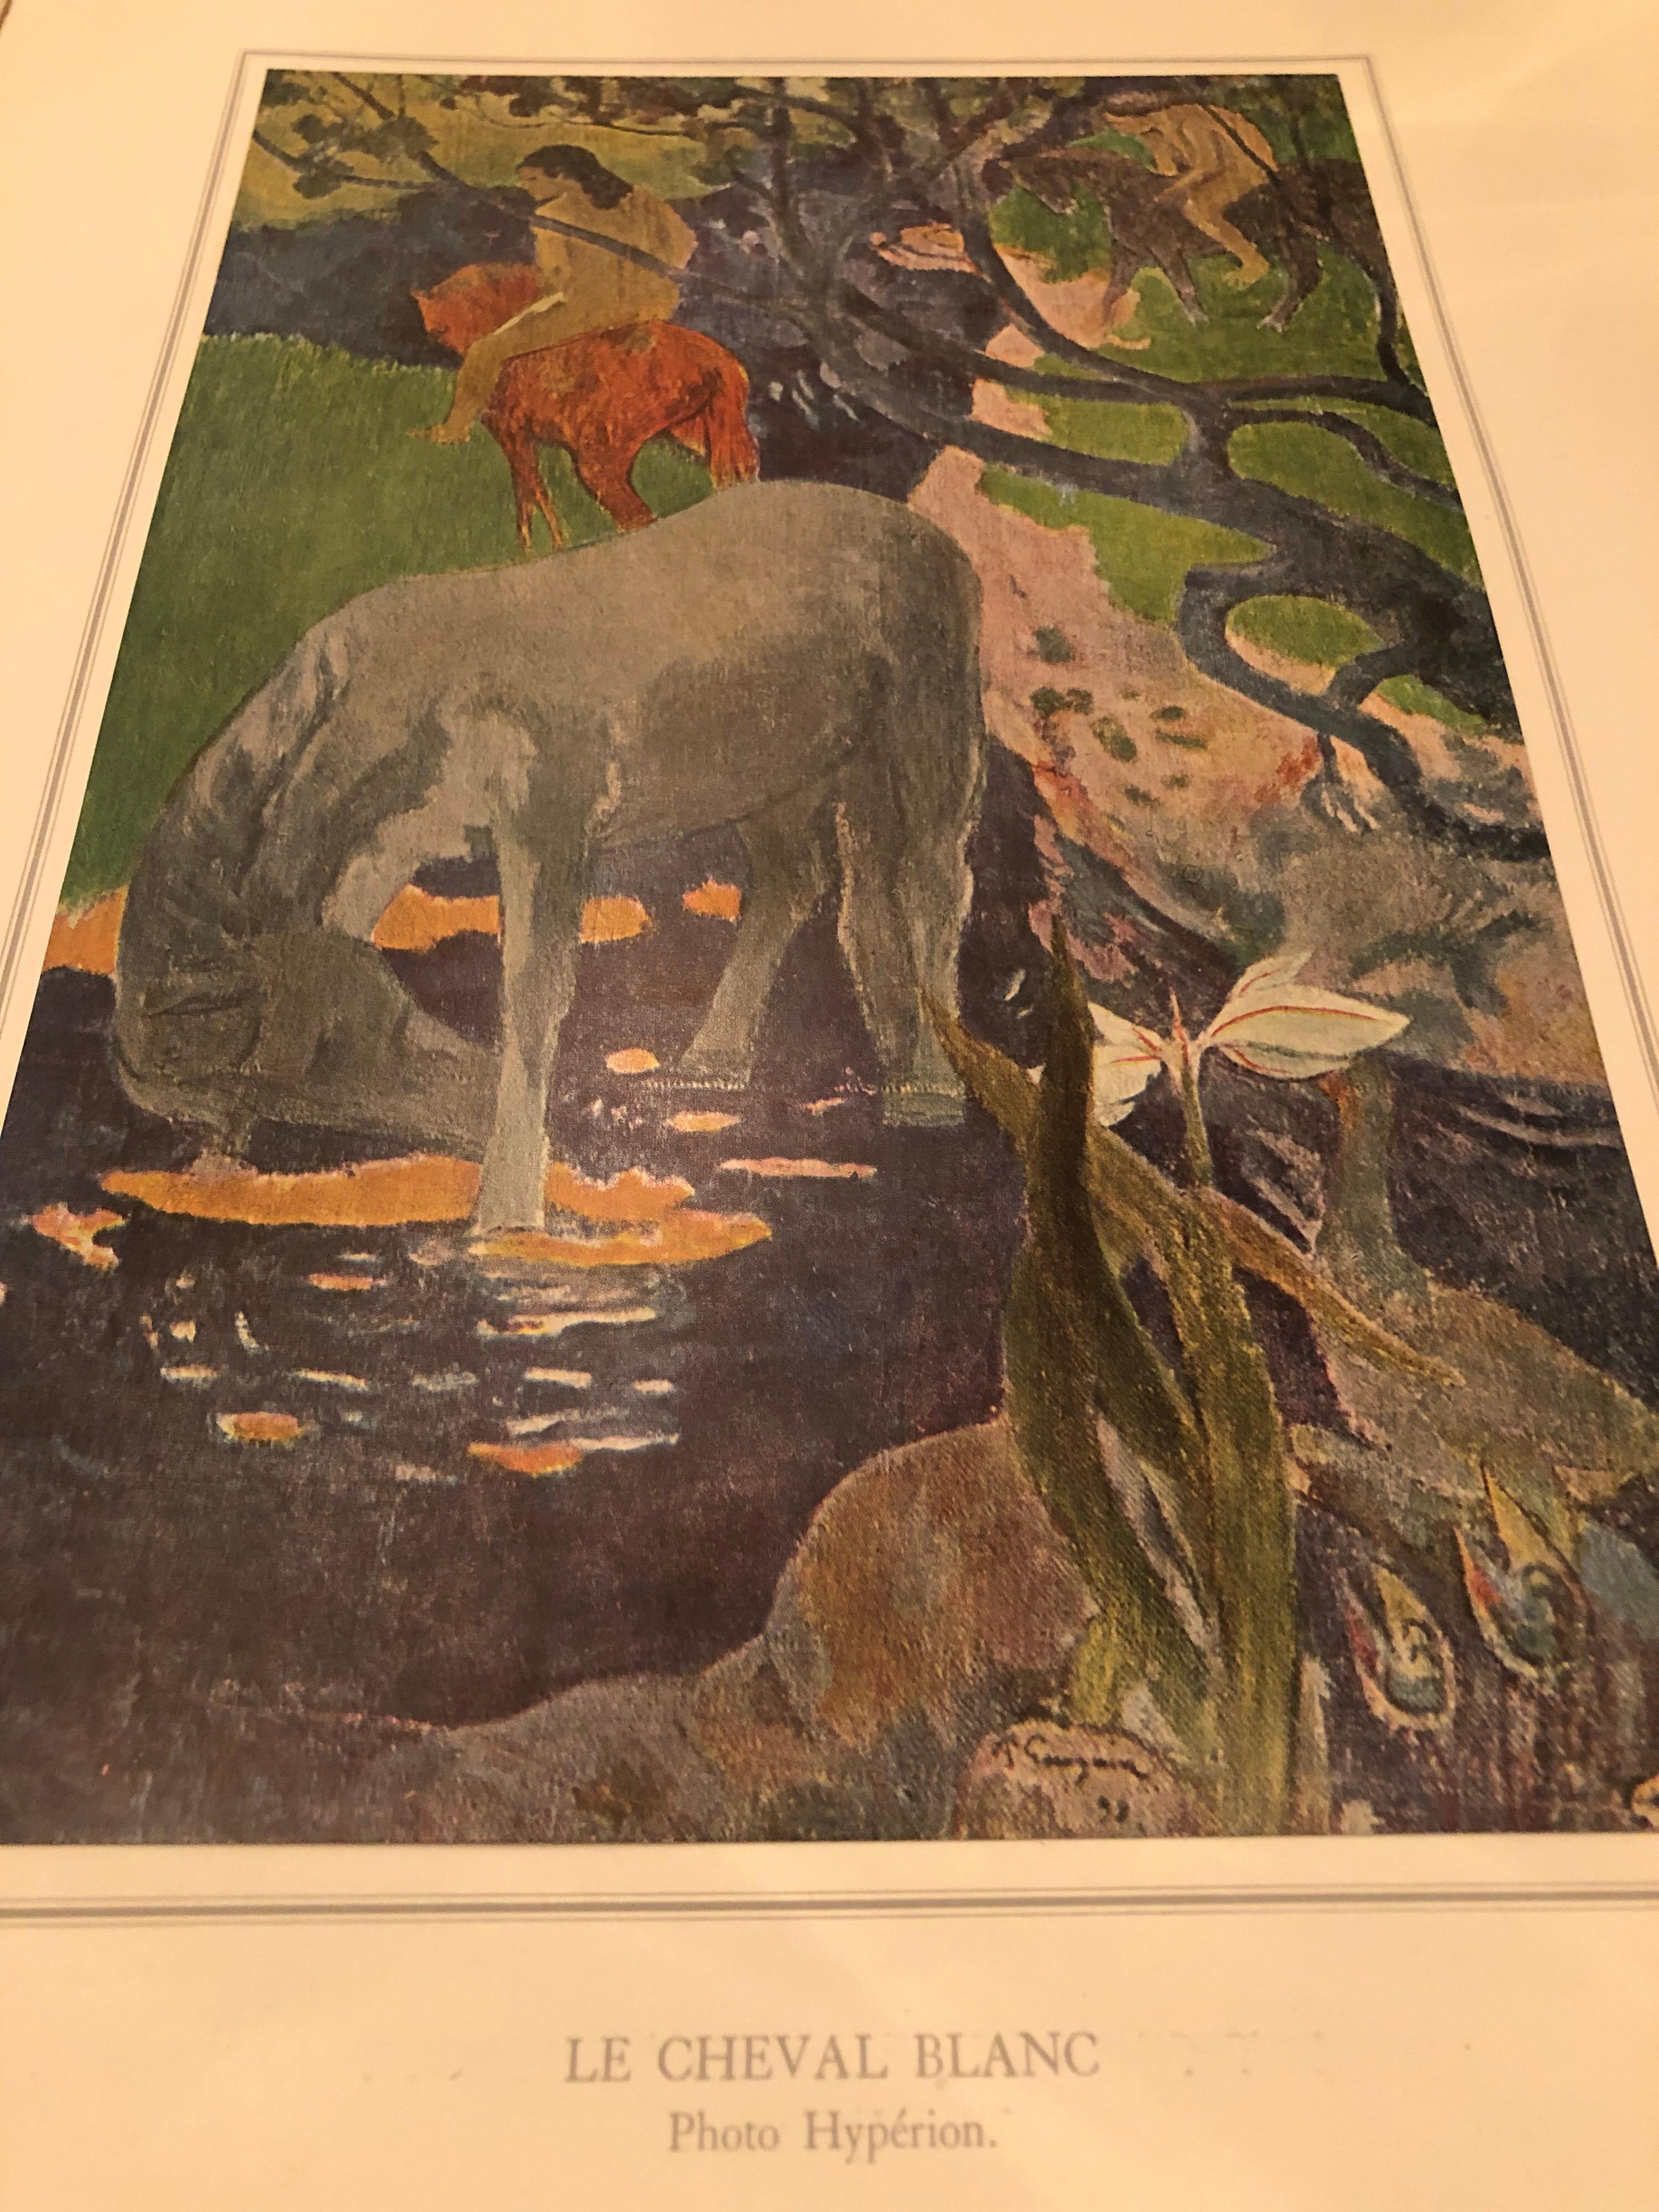 Post-Modern Eugène Henri Paul Gauguin by John Rewald, Editions Hyperion, Paris, 1938